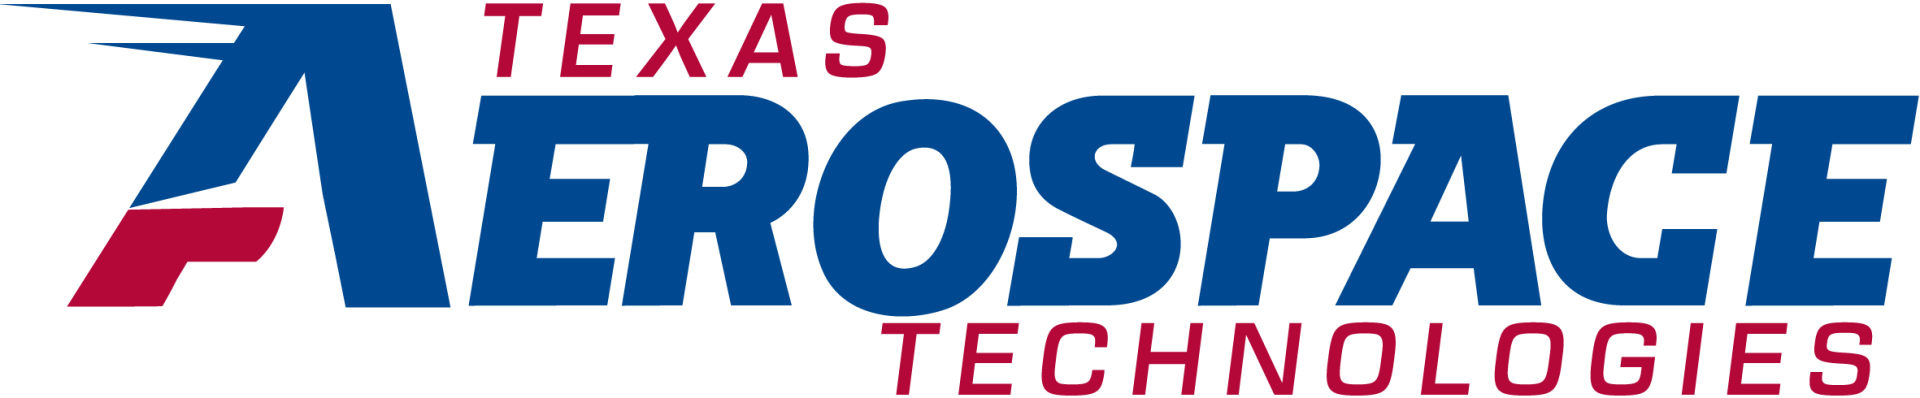 Texas Aerospace Technologies Logo